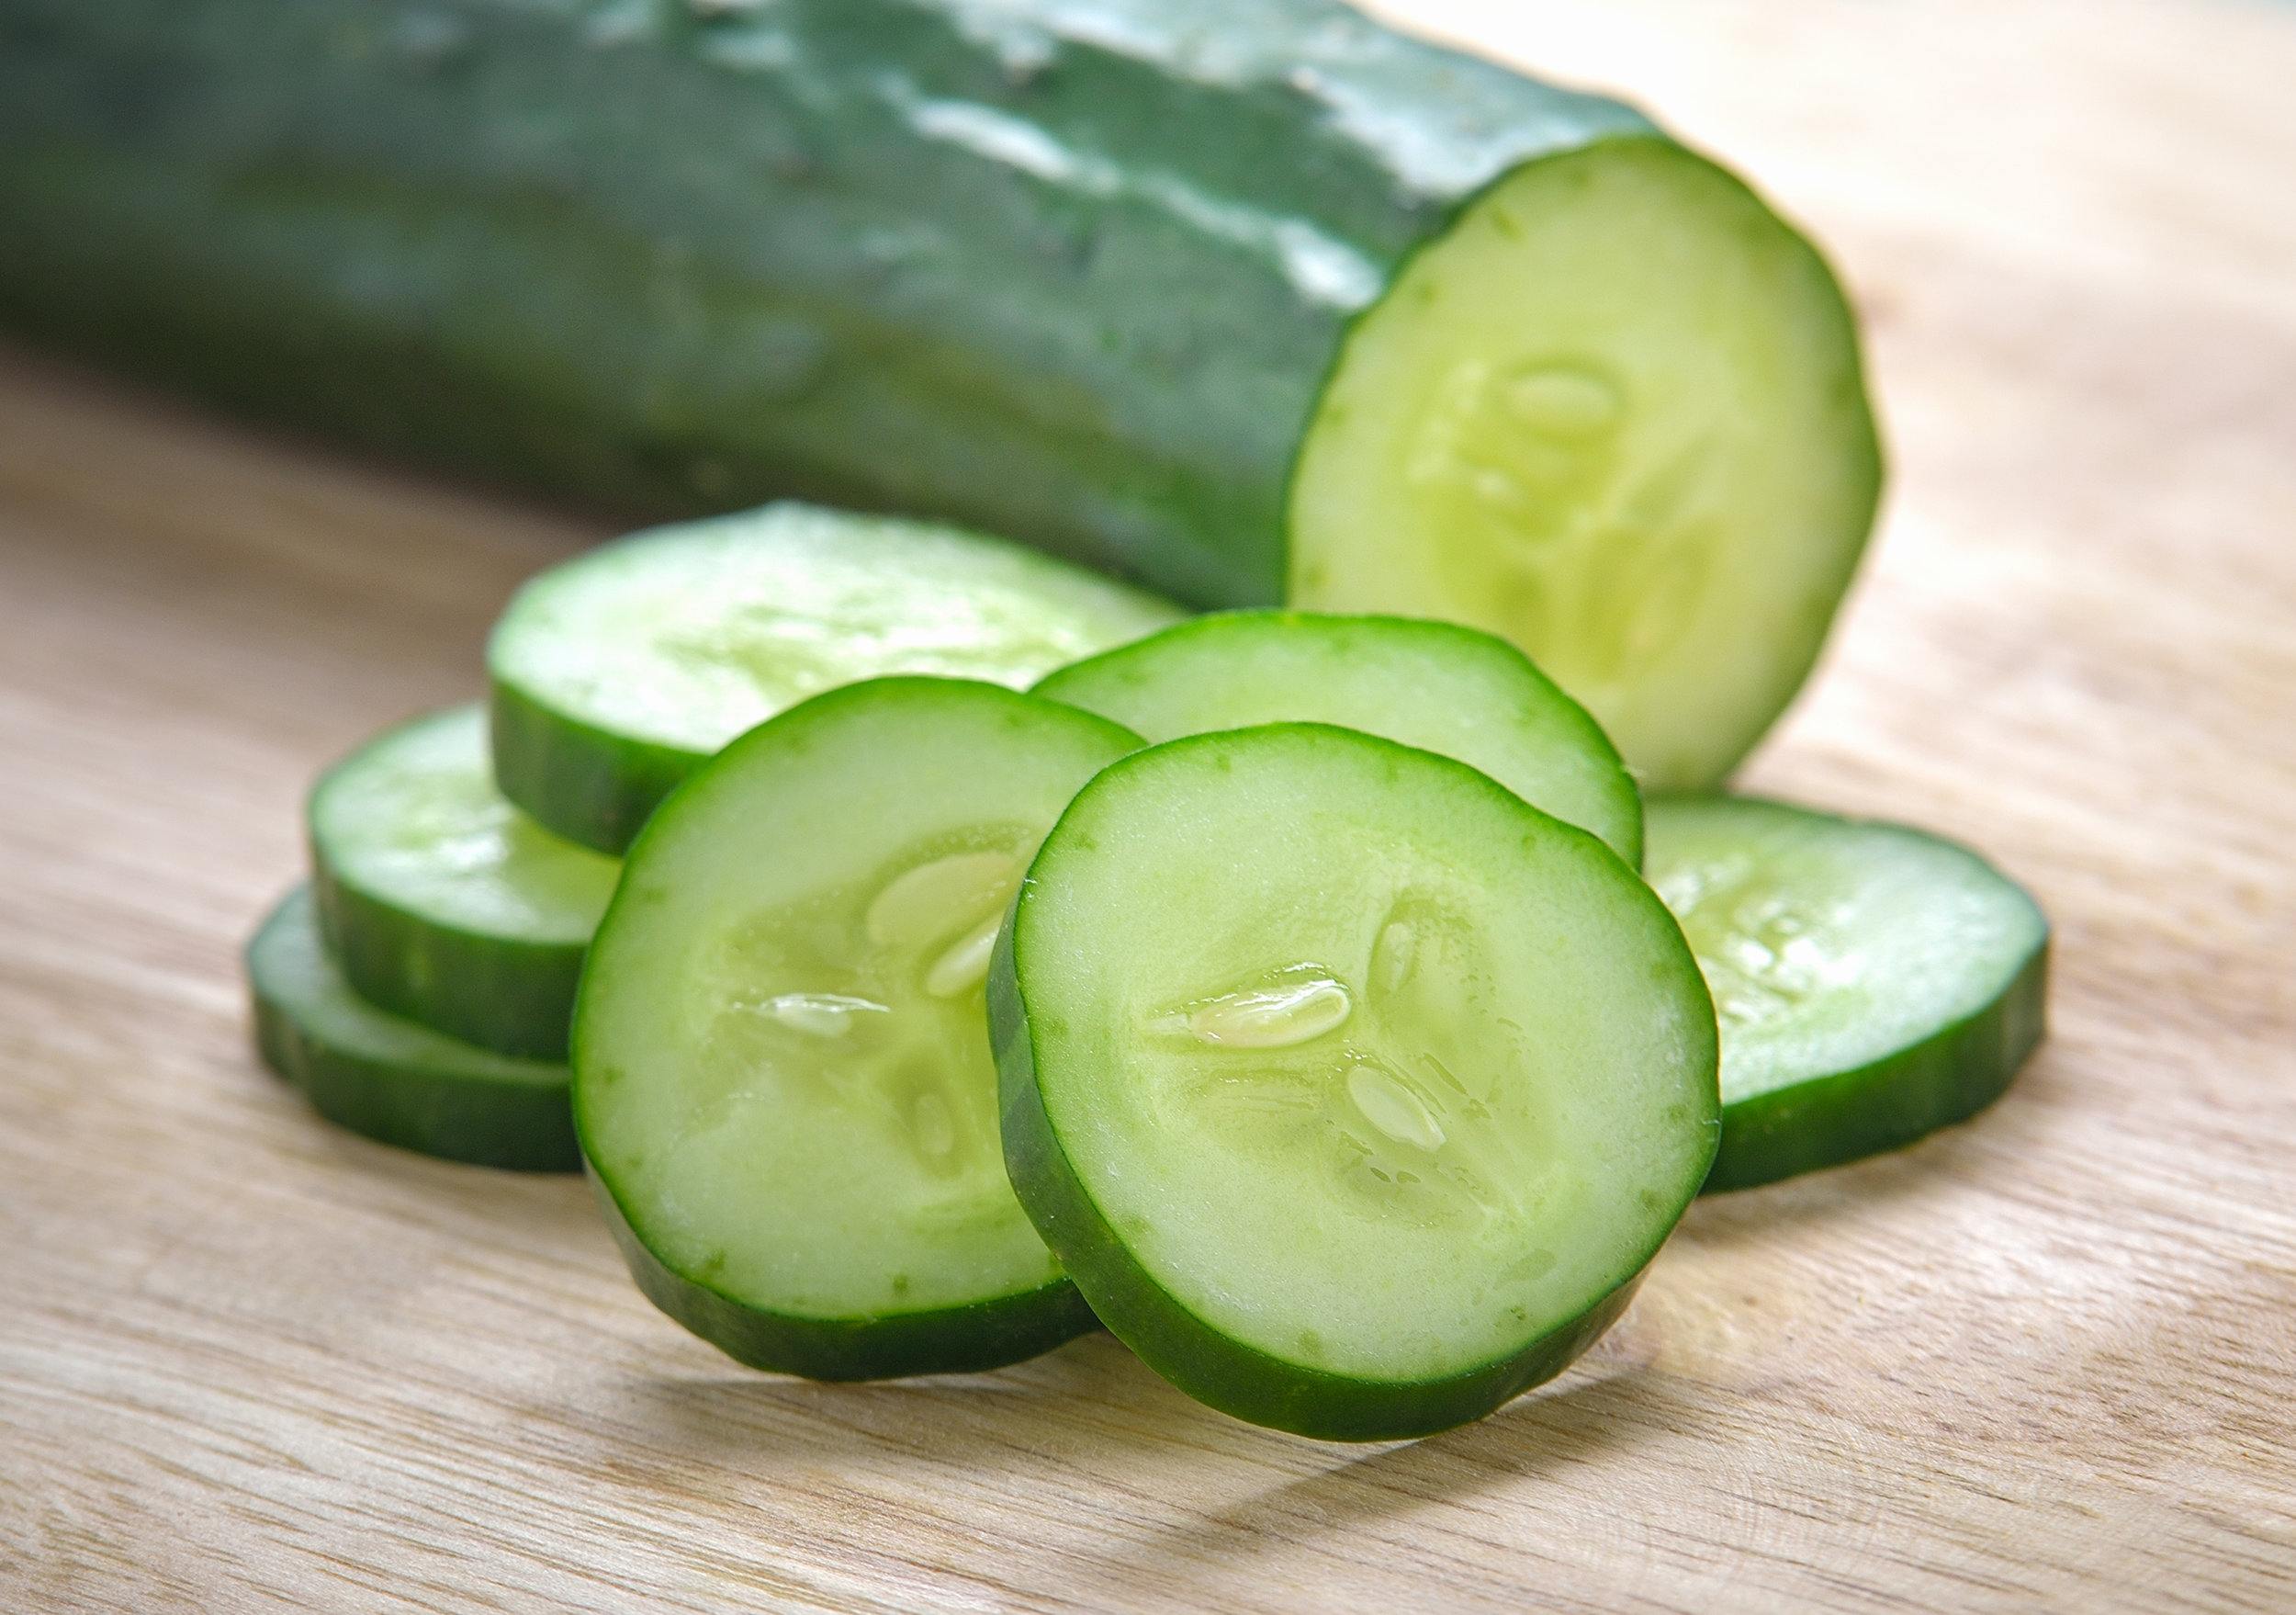 4" piece of cucumber = 15mg